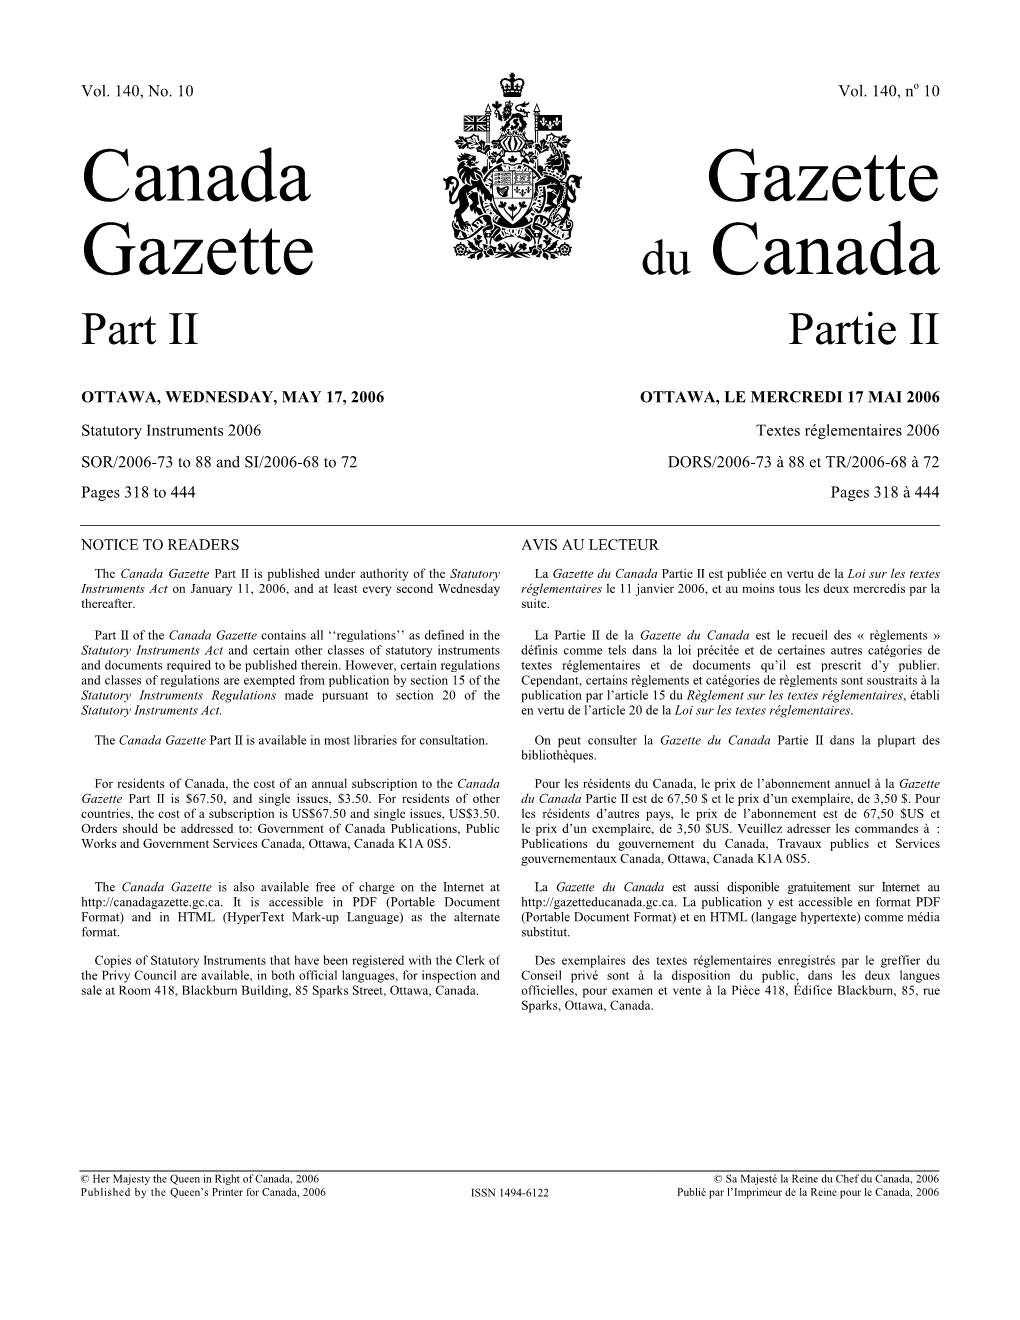 Canada Gazette, Part II, Vol